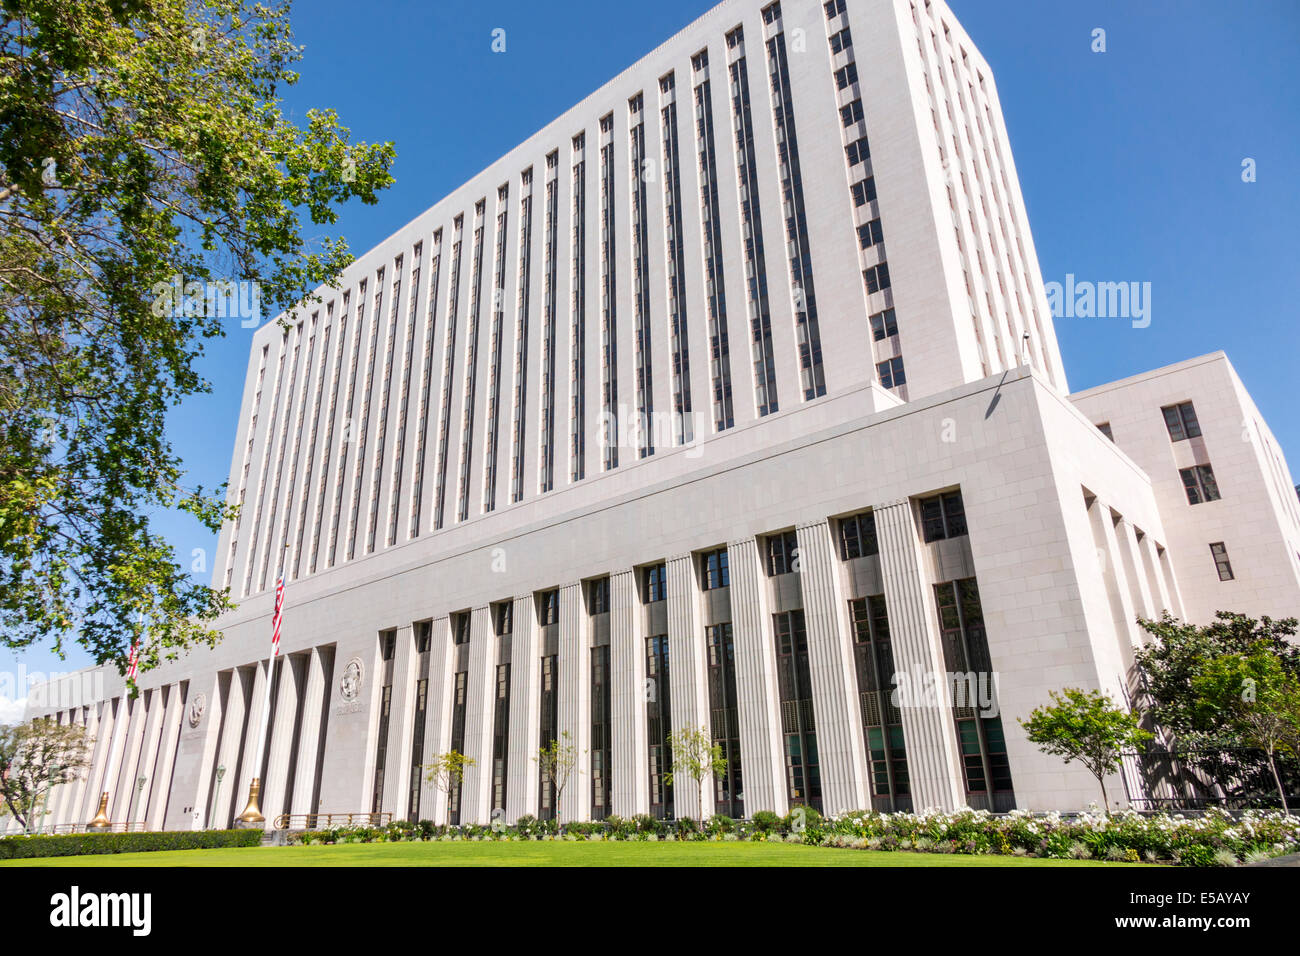 Los Angeles California,Downtown,Civic Center District,United States Court House,Federal Court,sezione giudiziaria,Art moderne,Architecture 1940,Historic b Foto Stock